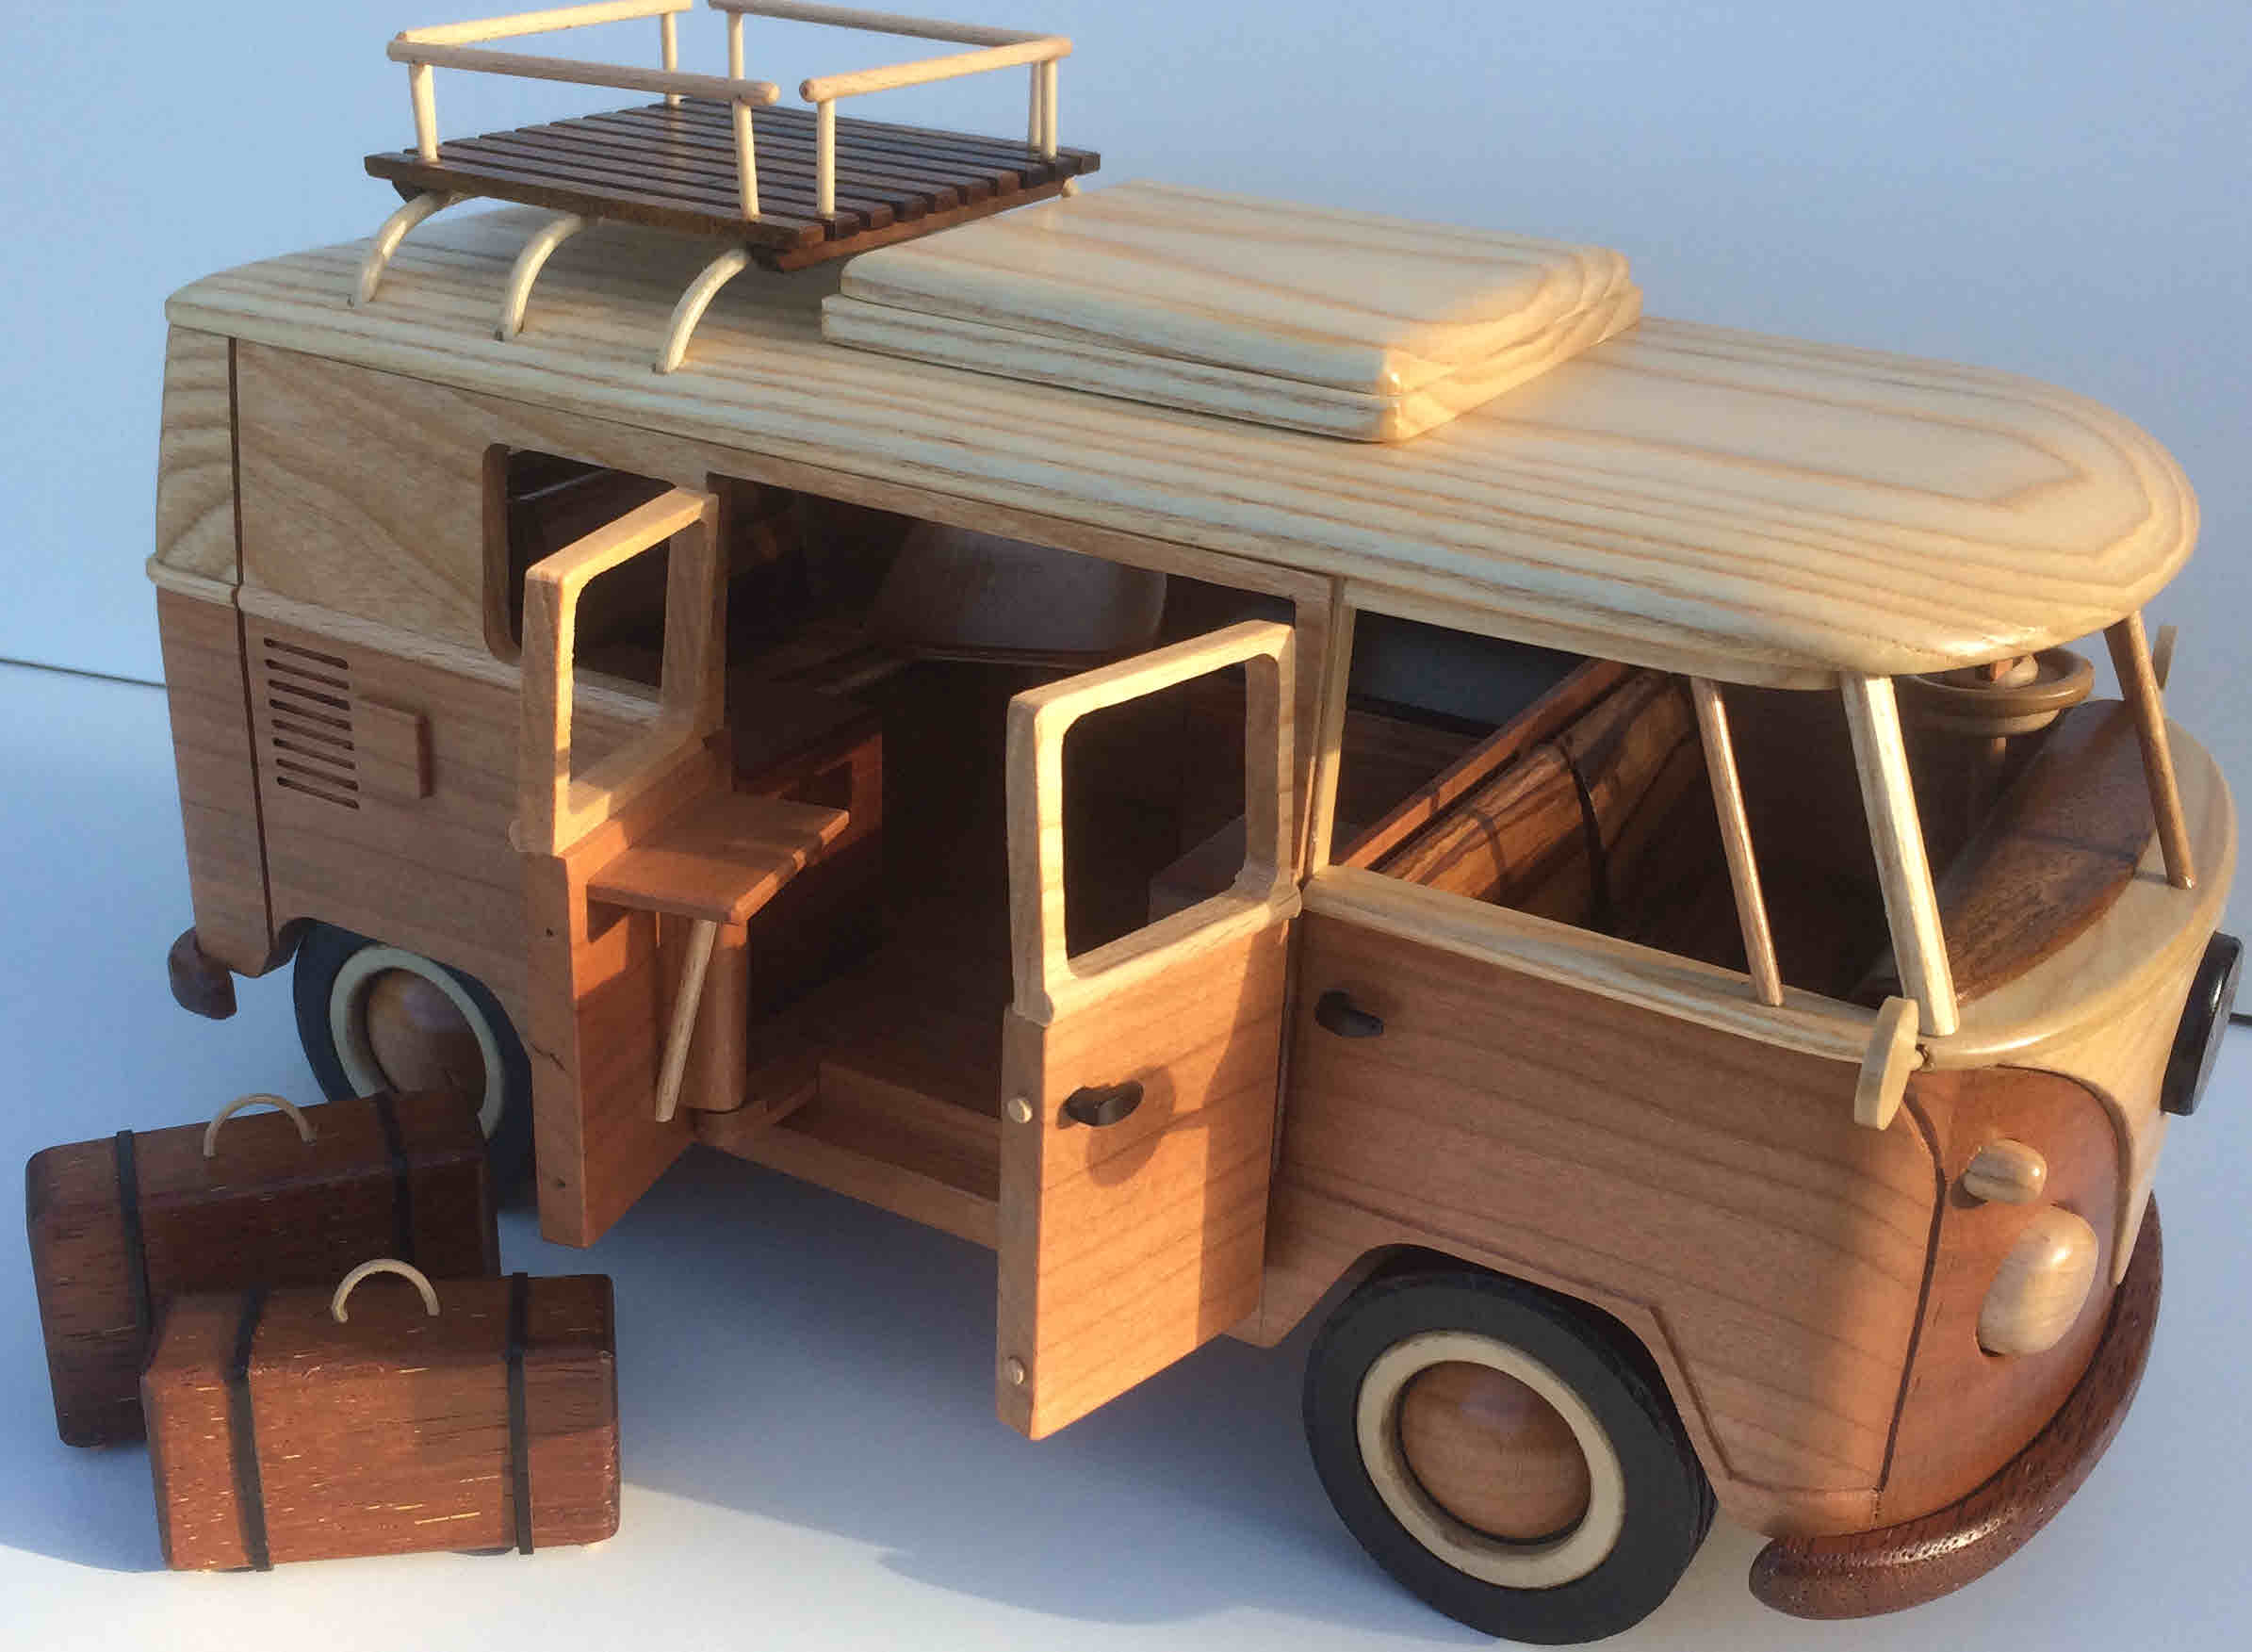 Illuminated VW T1 campervan volkswagen buli samba bus hand made wooden model 